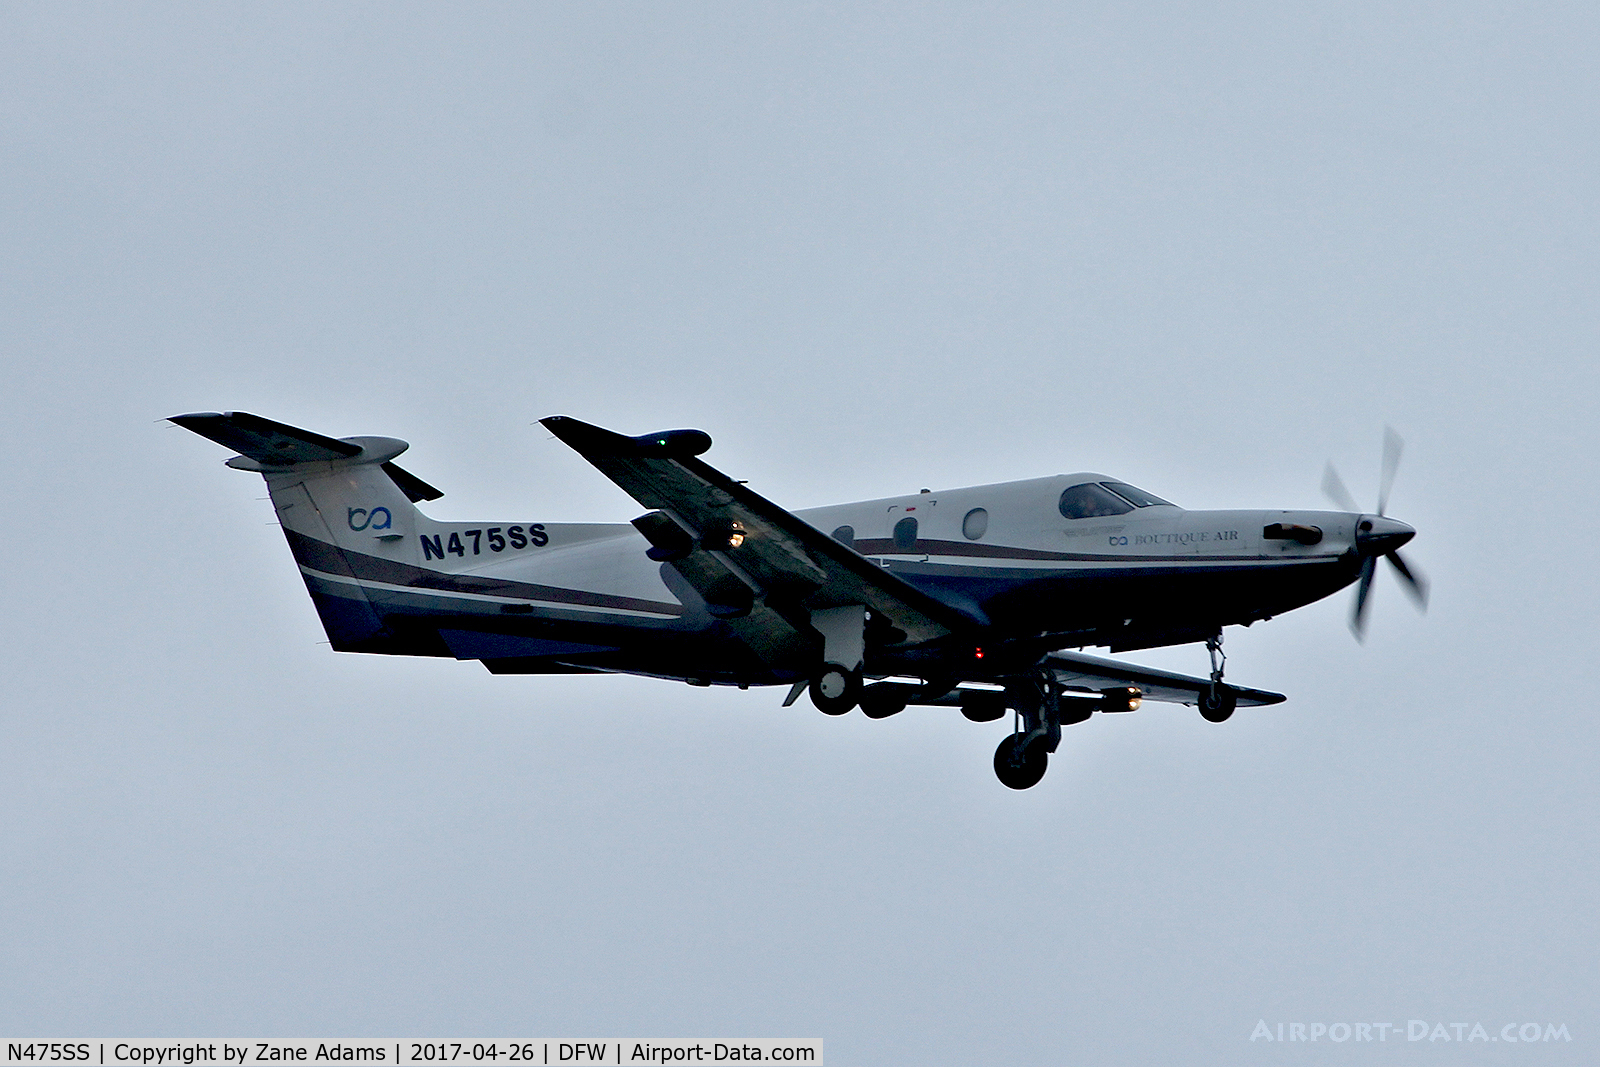 N475SS, 2007 Pilatus PC-12/47 C/N 866, Arriving at DFW Airport